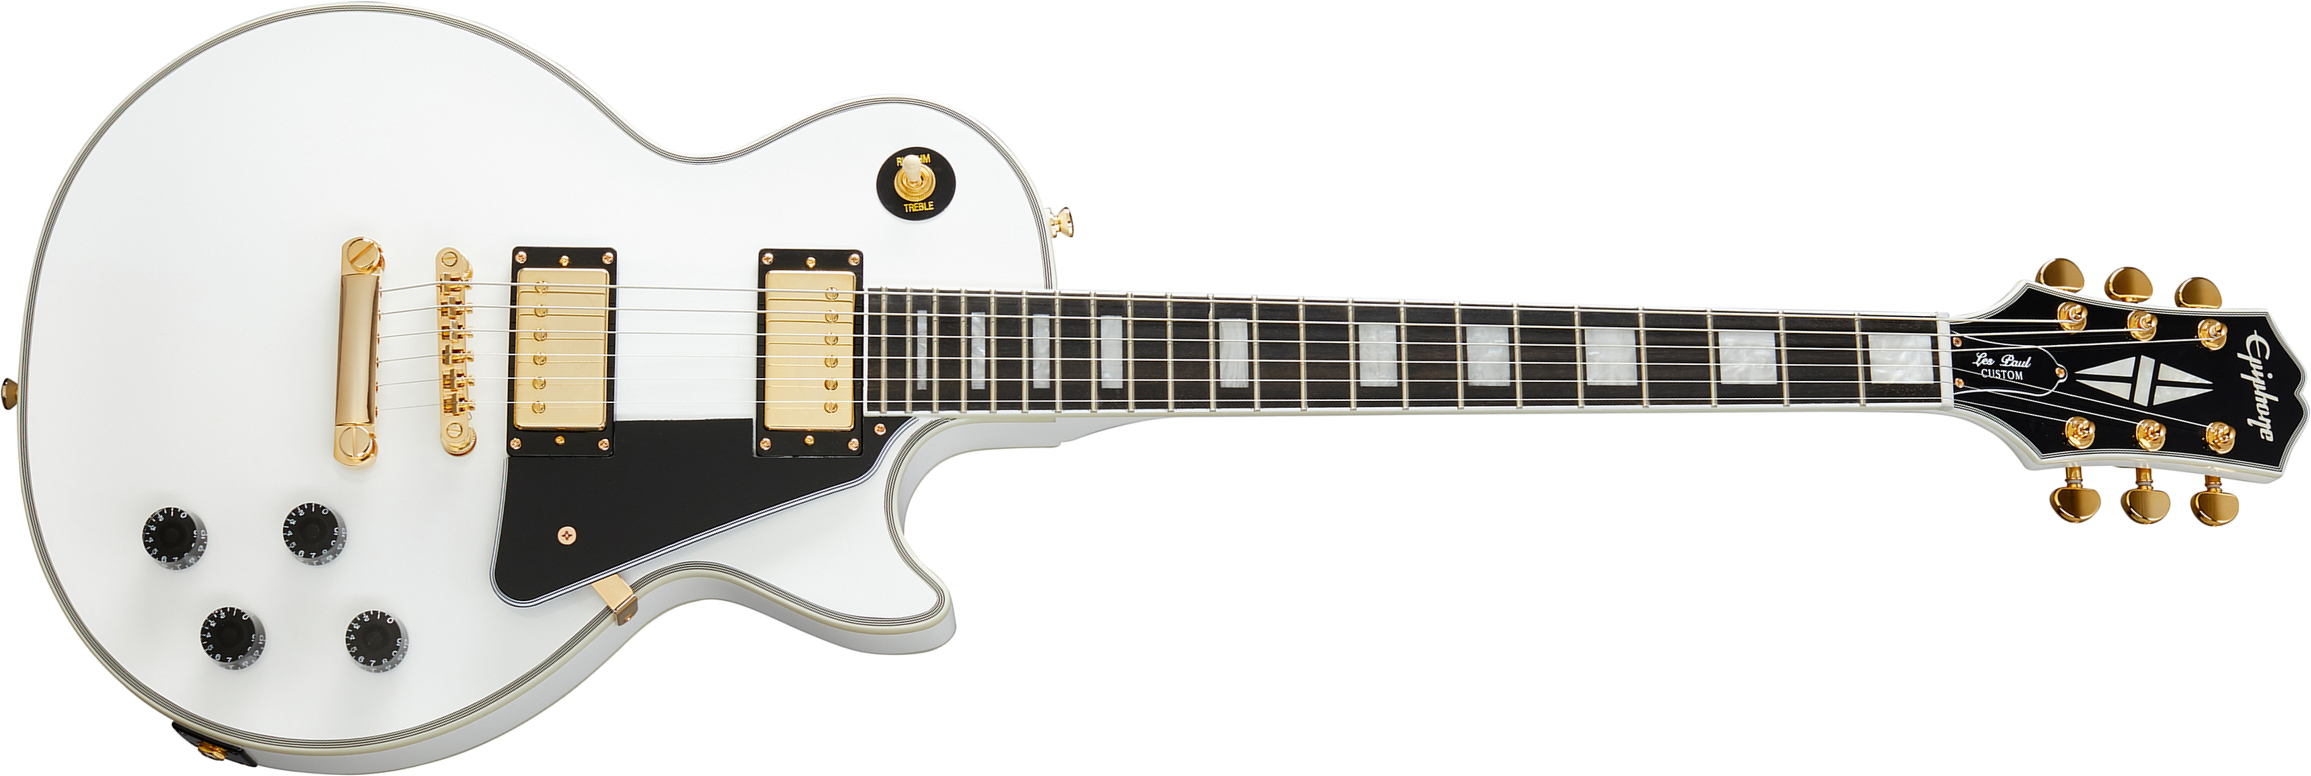 Epiphone Les Paul Custom 2h Ht Eb - Alpine White - Single cut electric guitar - Main picture